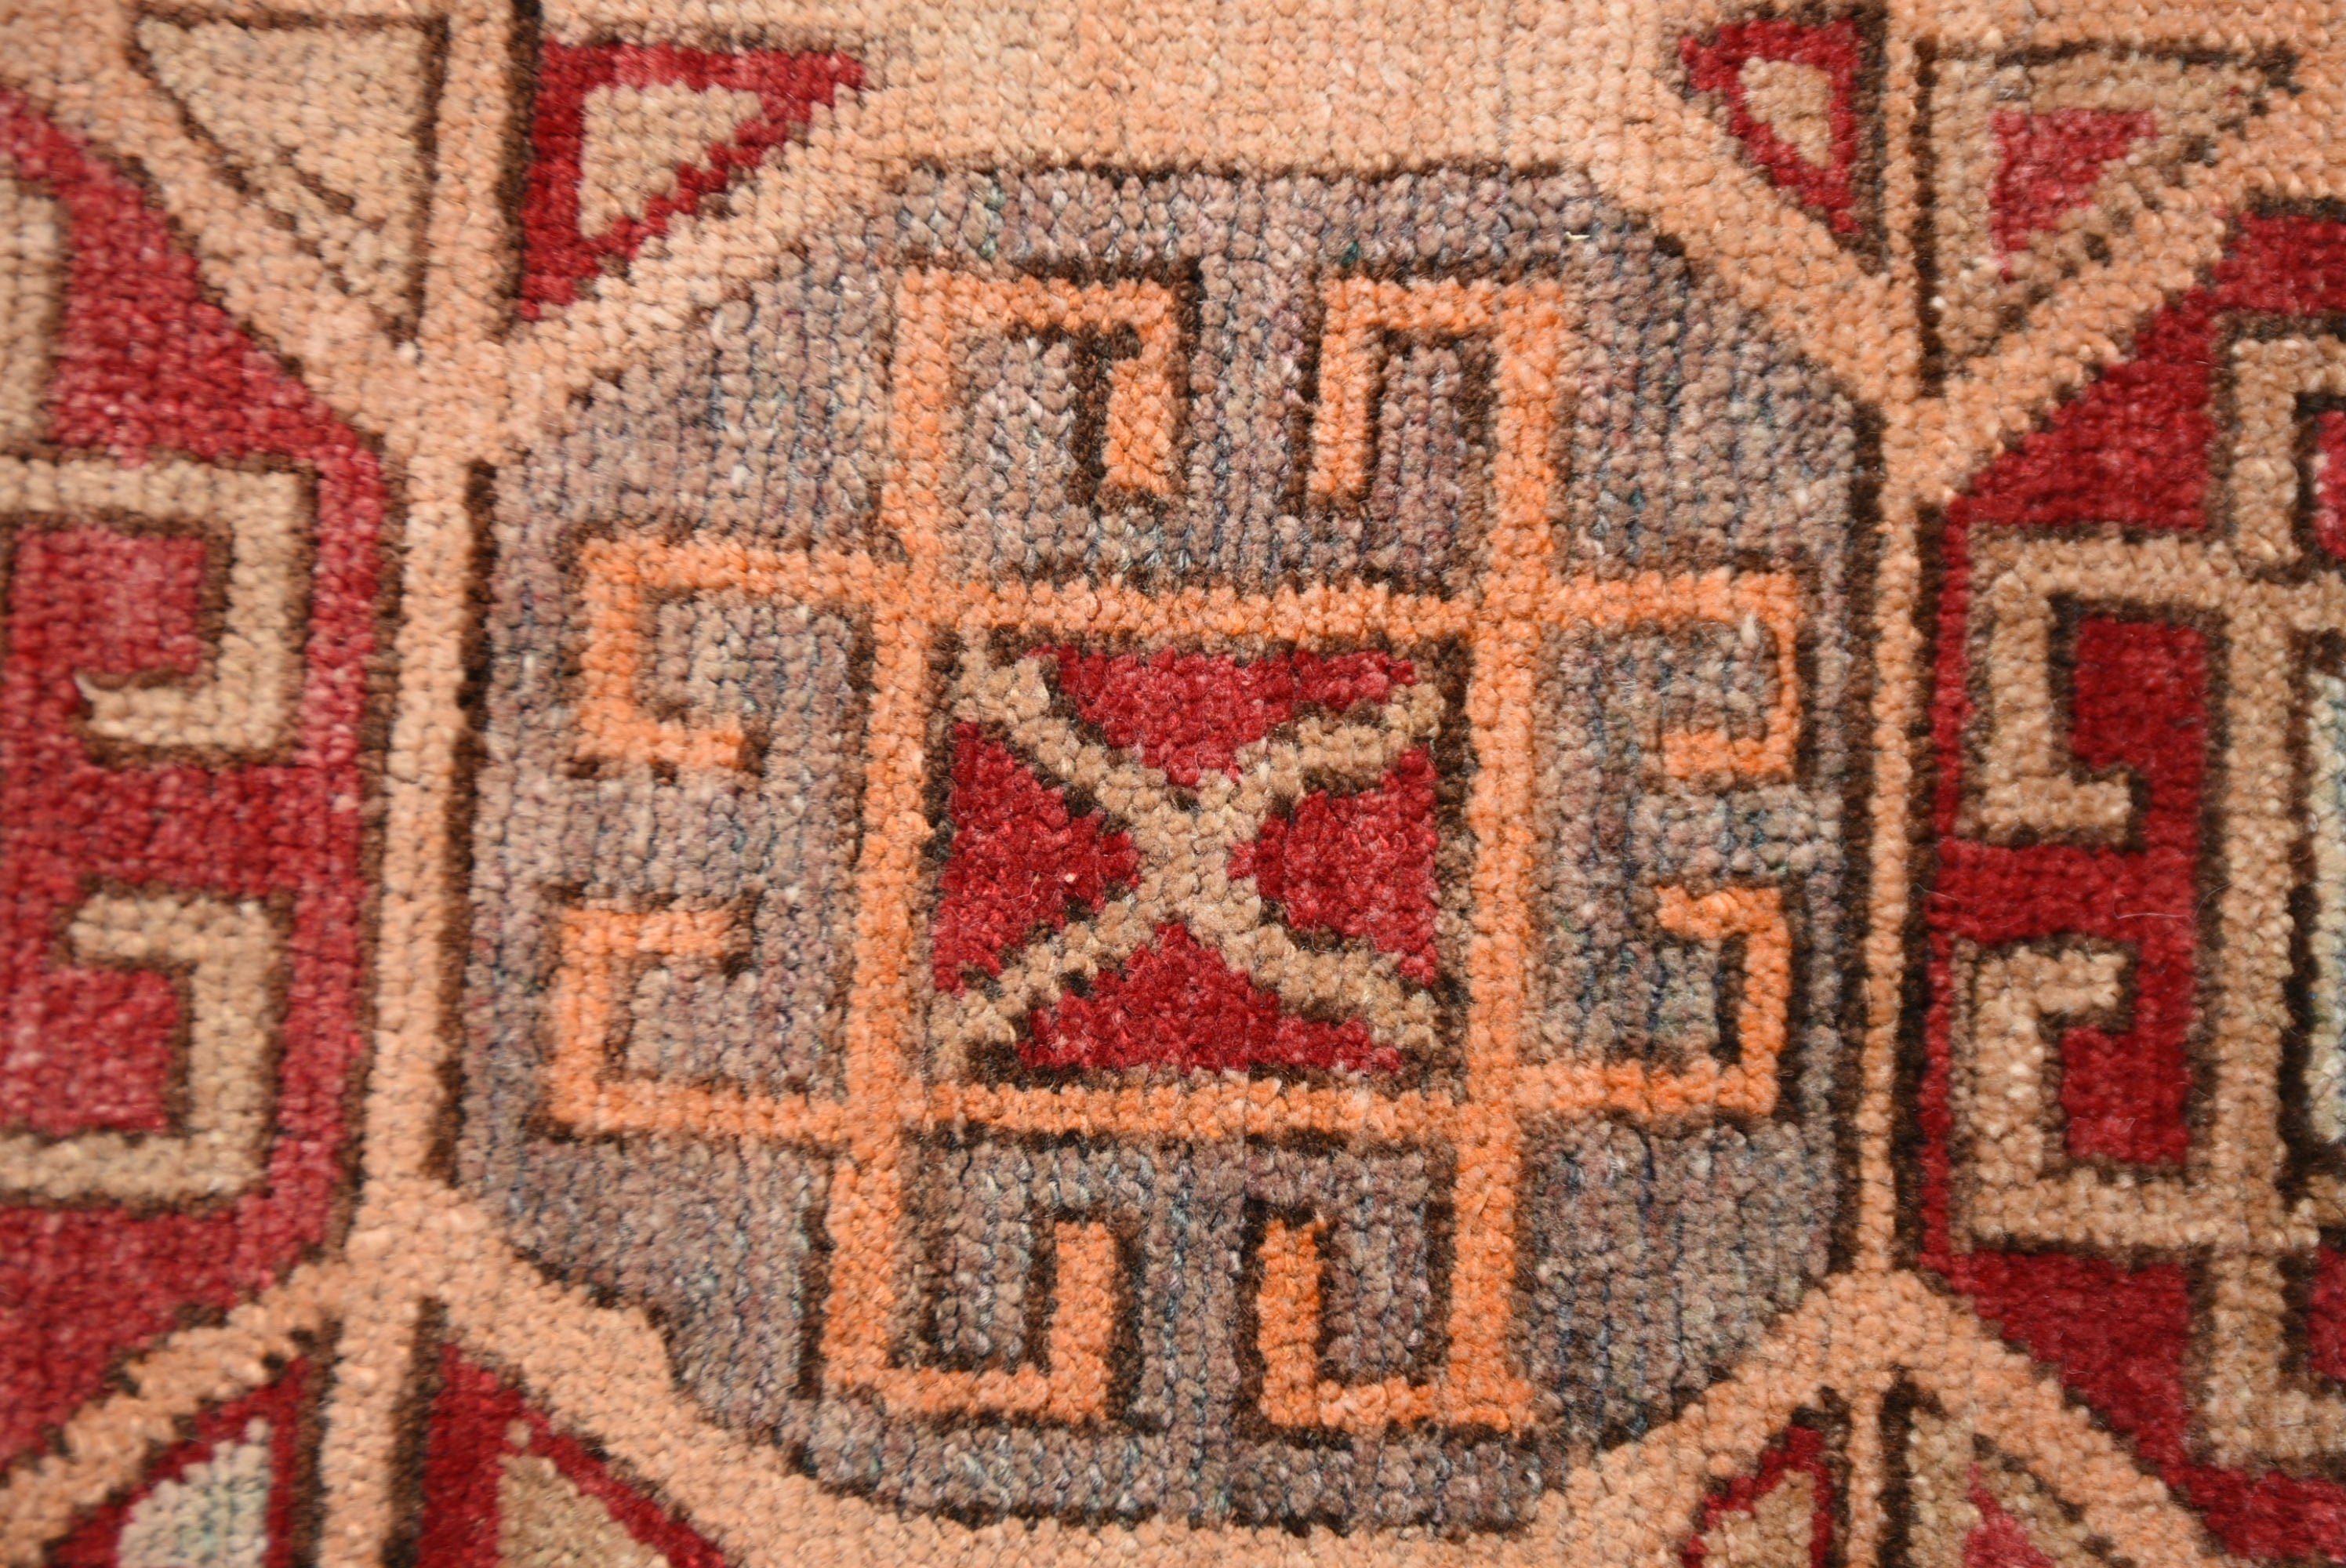 Vintage Rug, Kitchen Rugs, Turkish Rug, 4.6x6.4 ft Area Rugs, Rugs for Floor, Red Moroccan Rug, Nursery Rug, Antique Rug, Living Room Rug